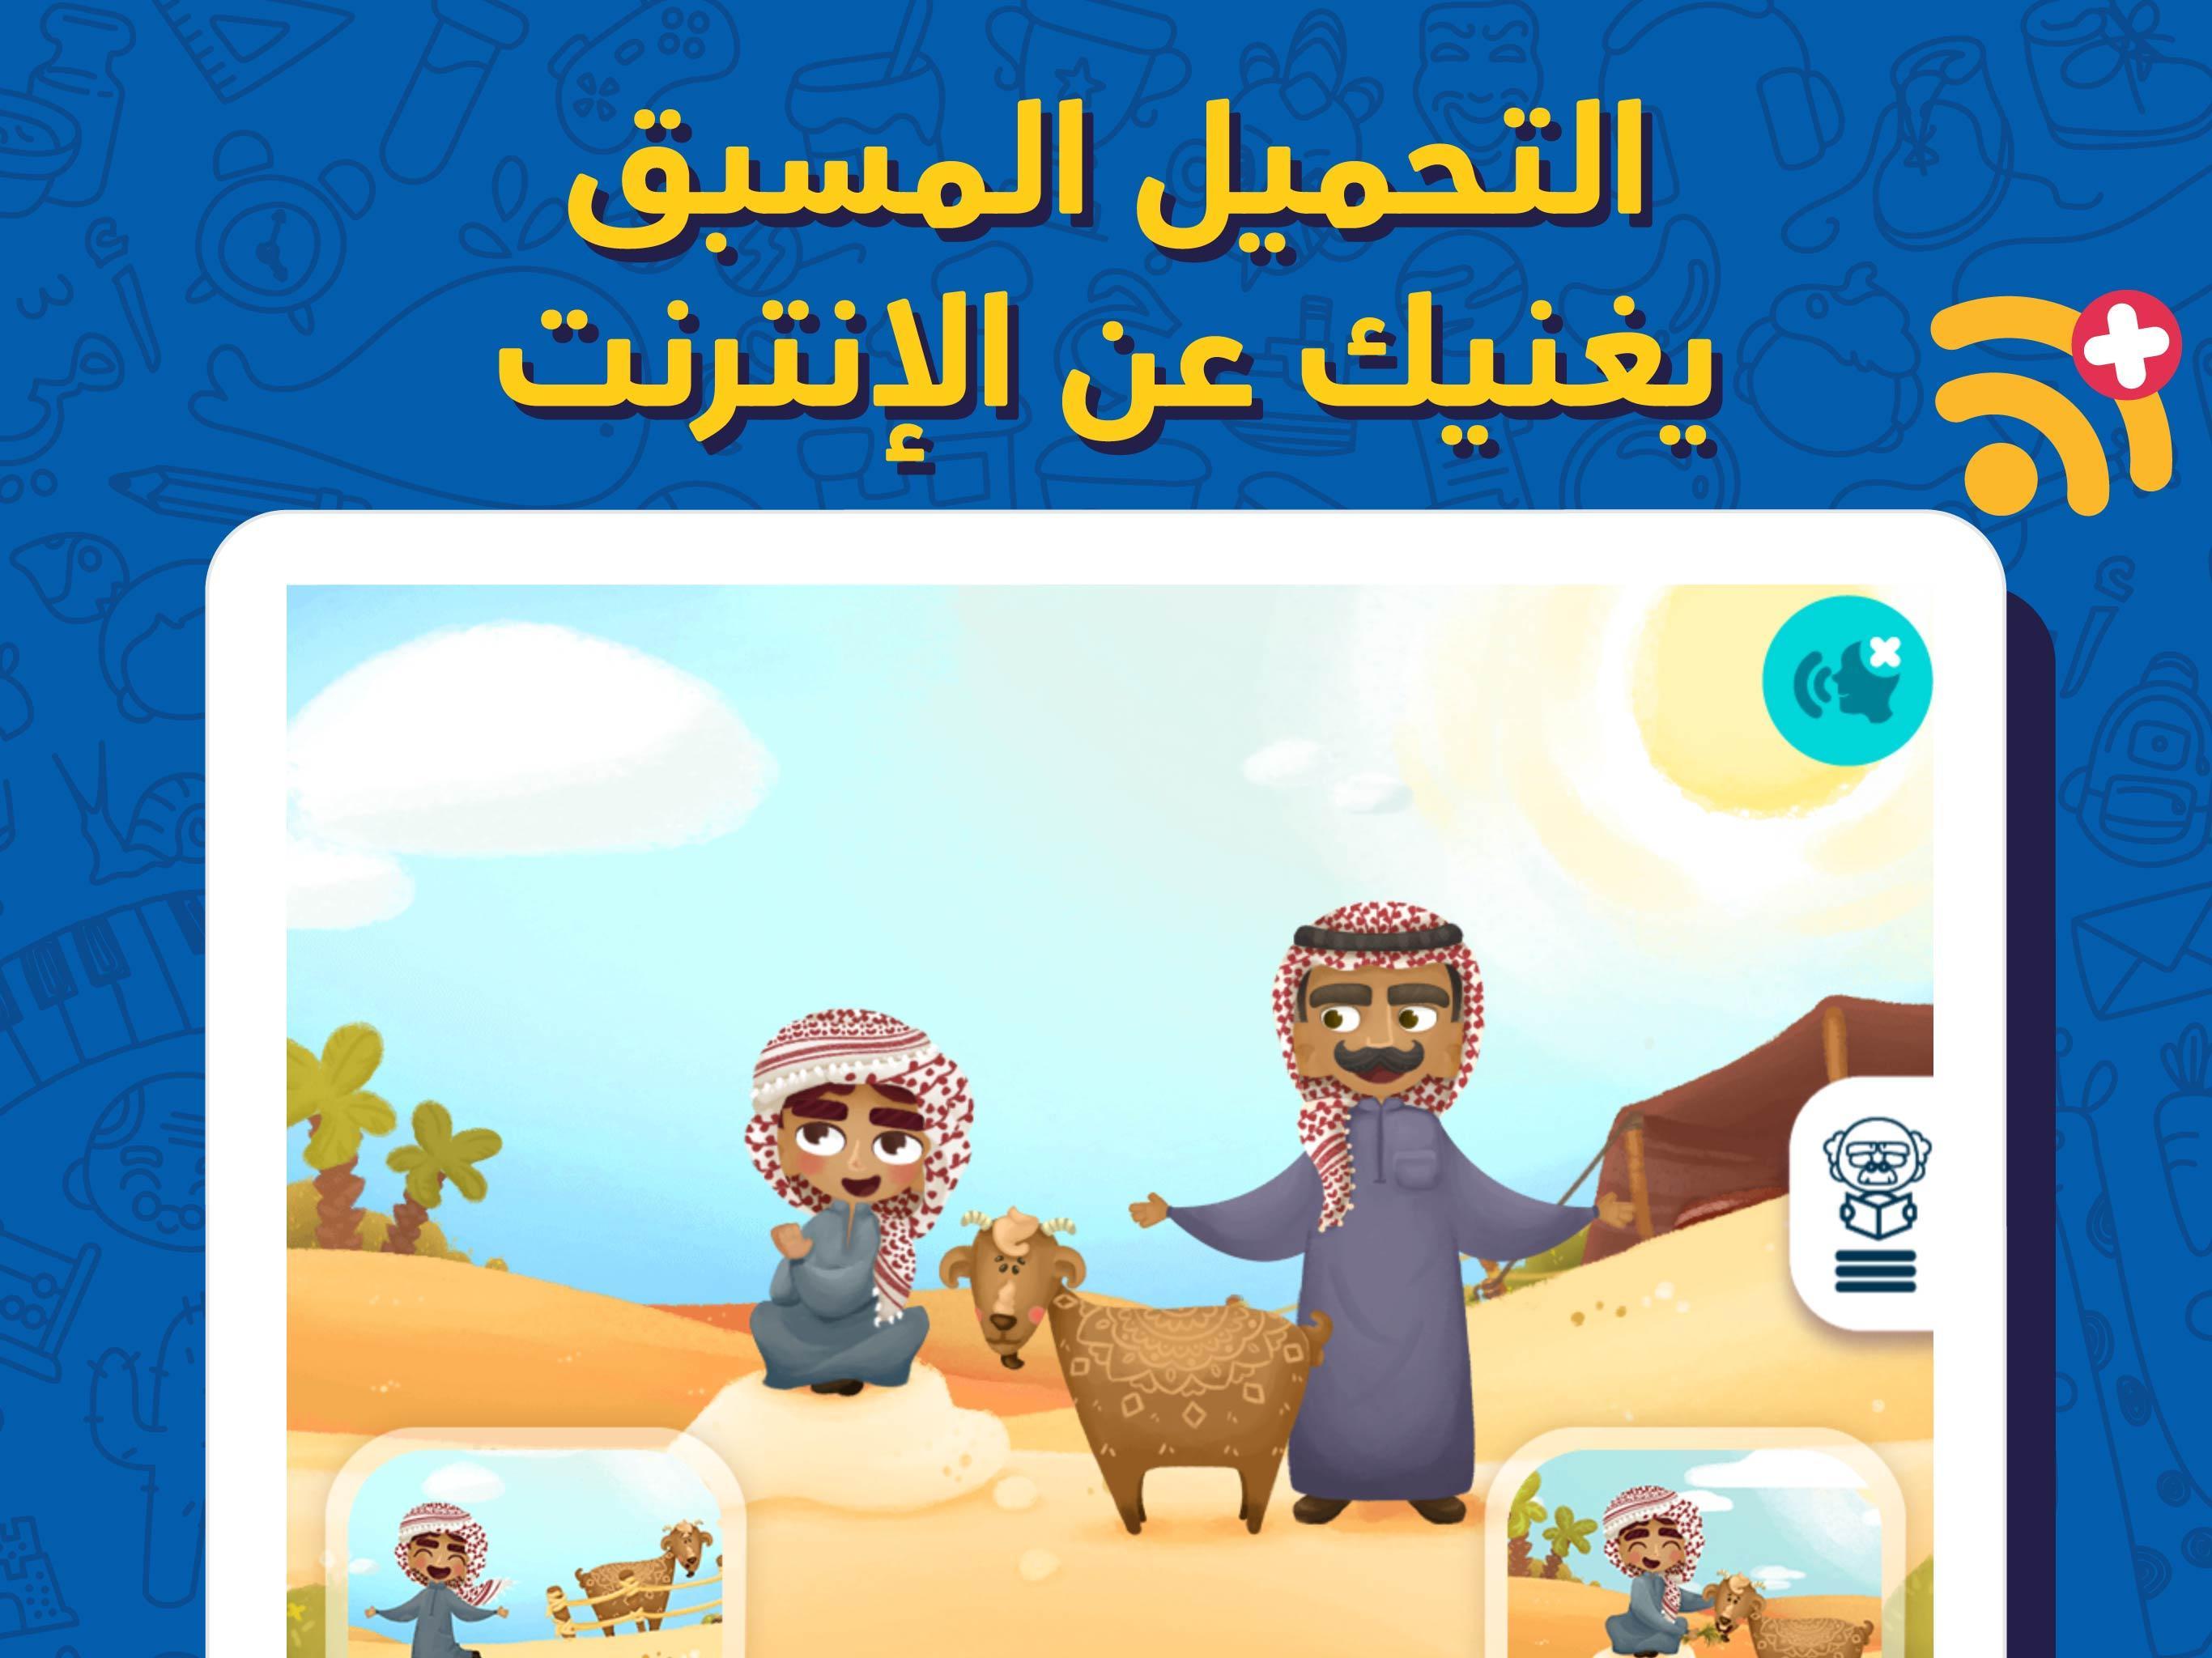 Lamsa Stories, Games, and Activities for Children 4.18.0 Screenshot 13